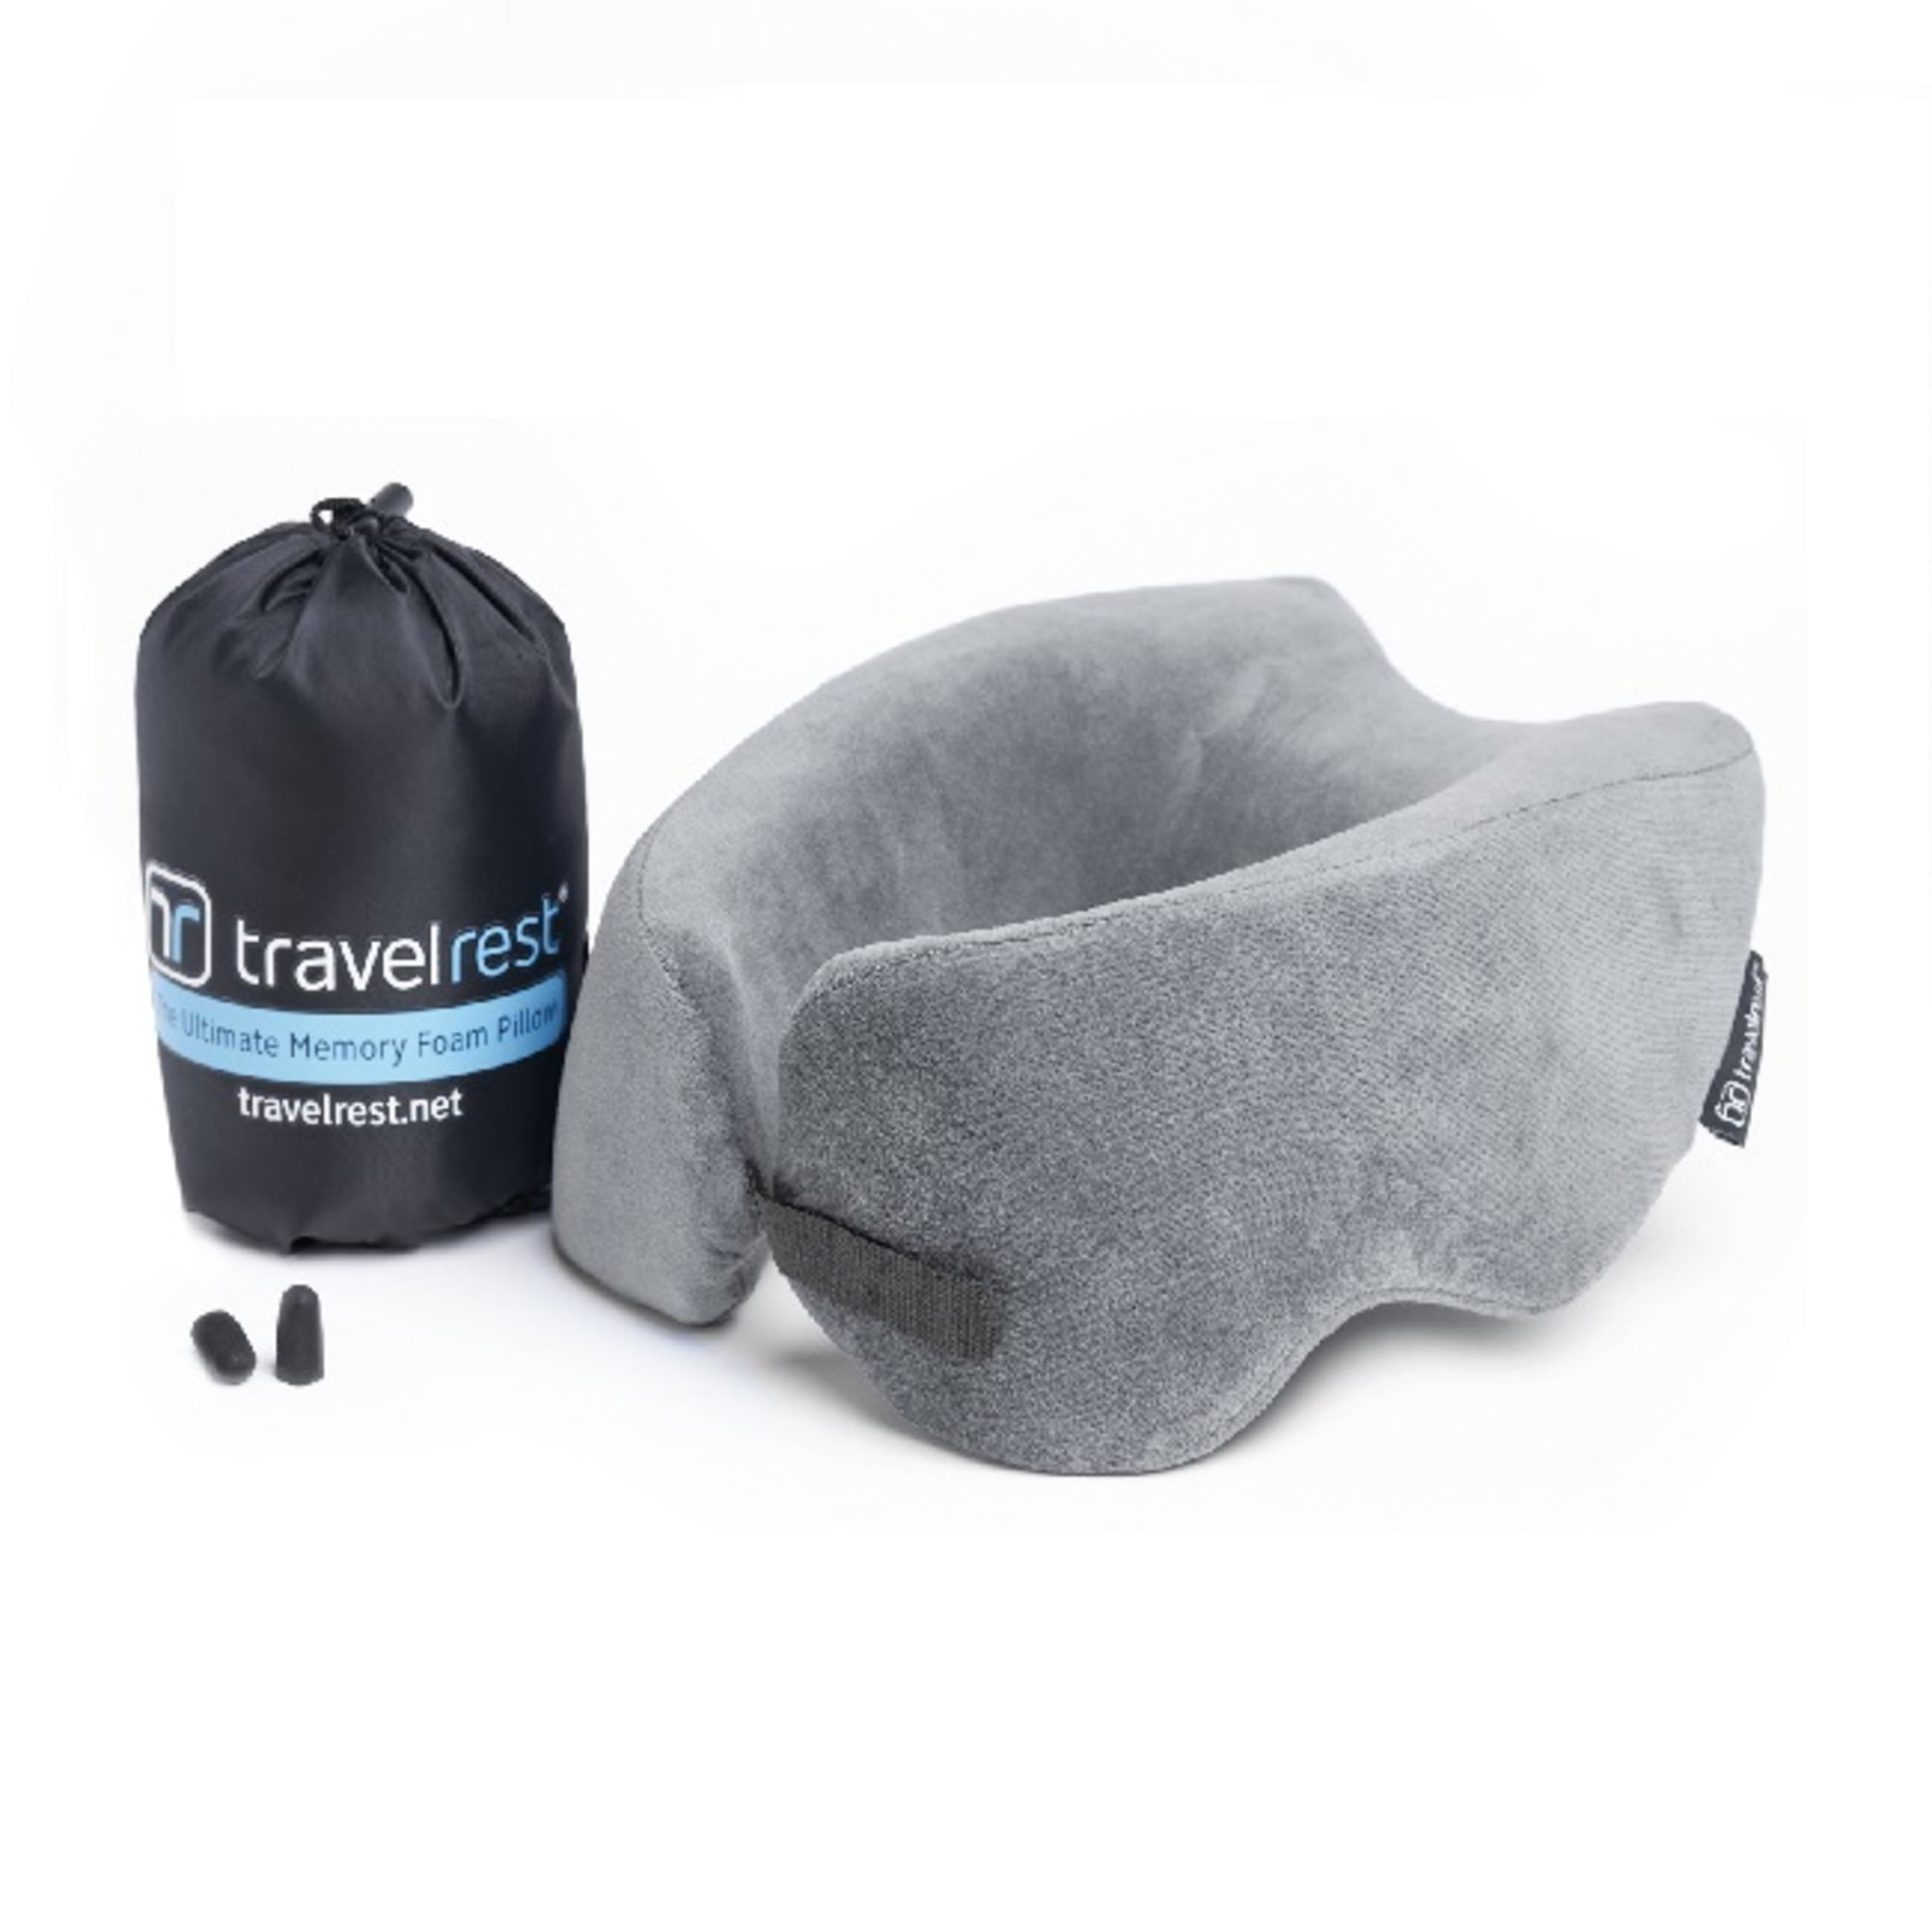 travelrest nest ultimate memory foam travel pillow review